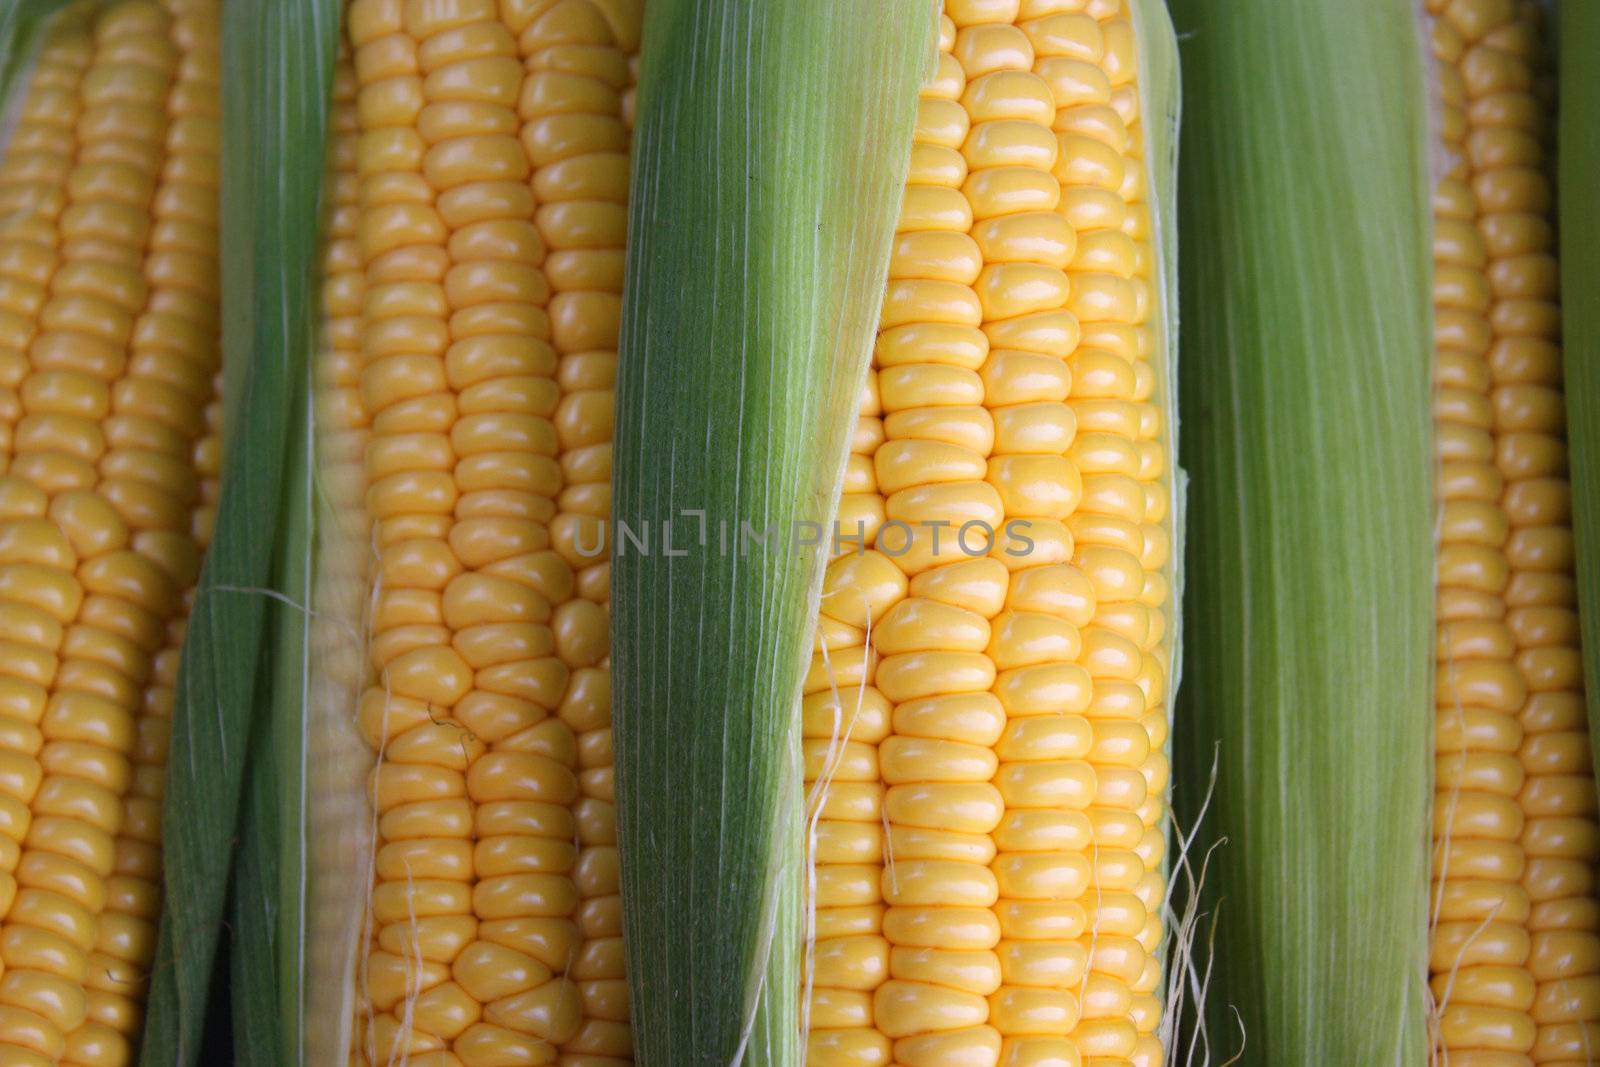 Corn on the cob by ksenish